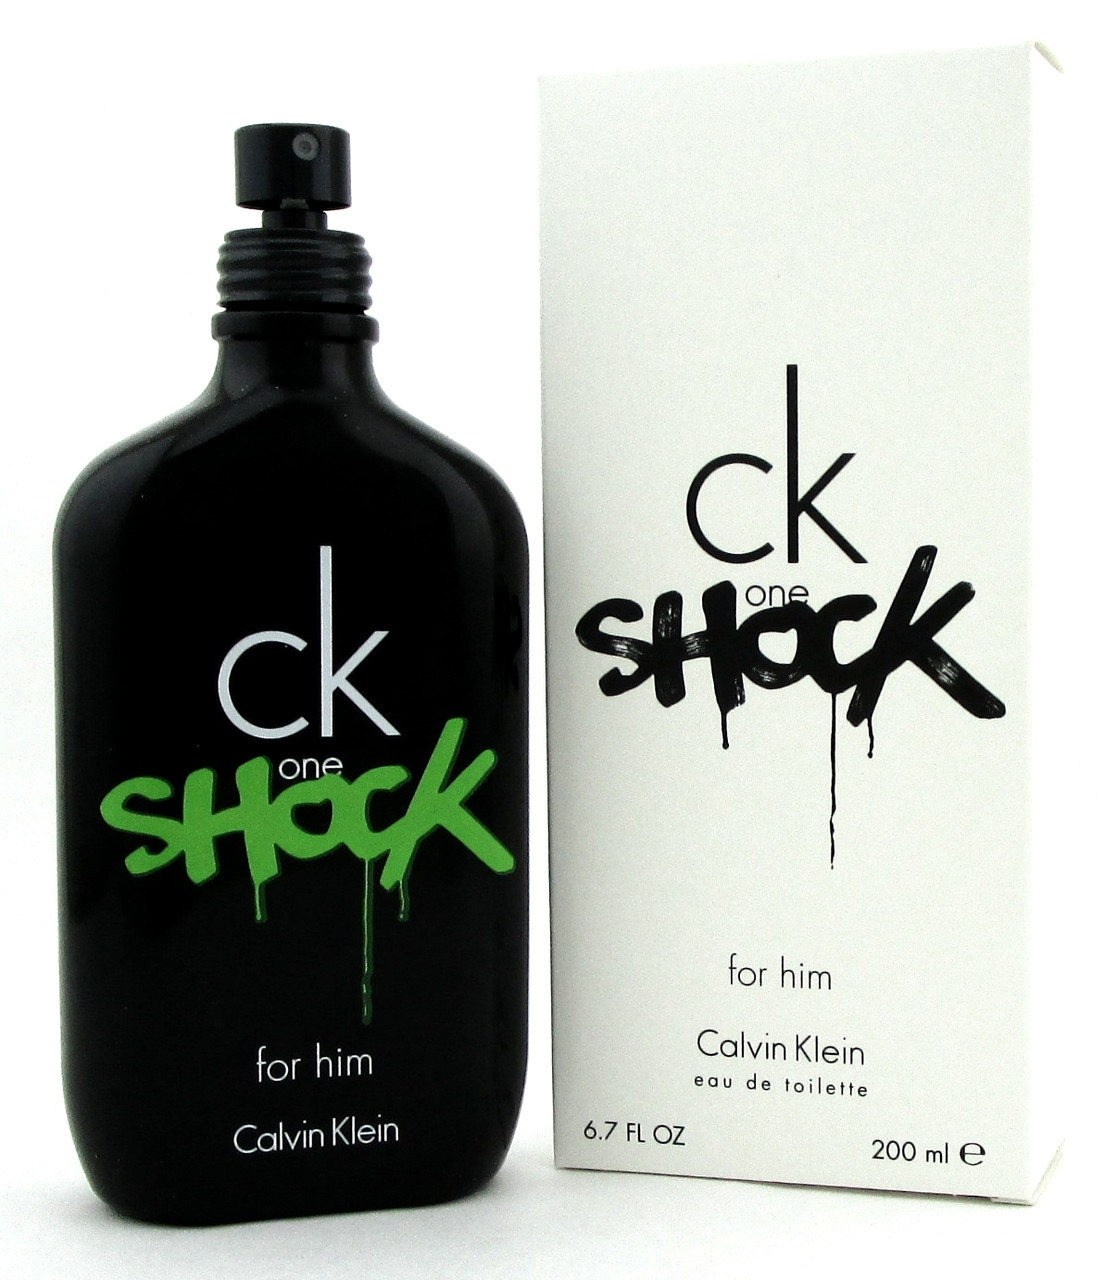 Купить ck one shock. CK one Shock for him. CK one Shock men 100ml Test. CK one Shock Calvin Klein. Духи CK one Shock.